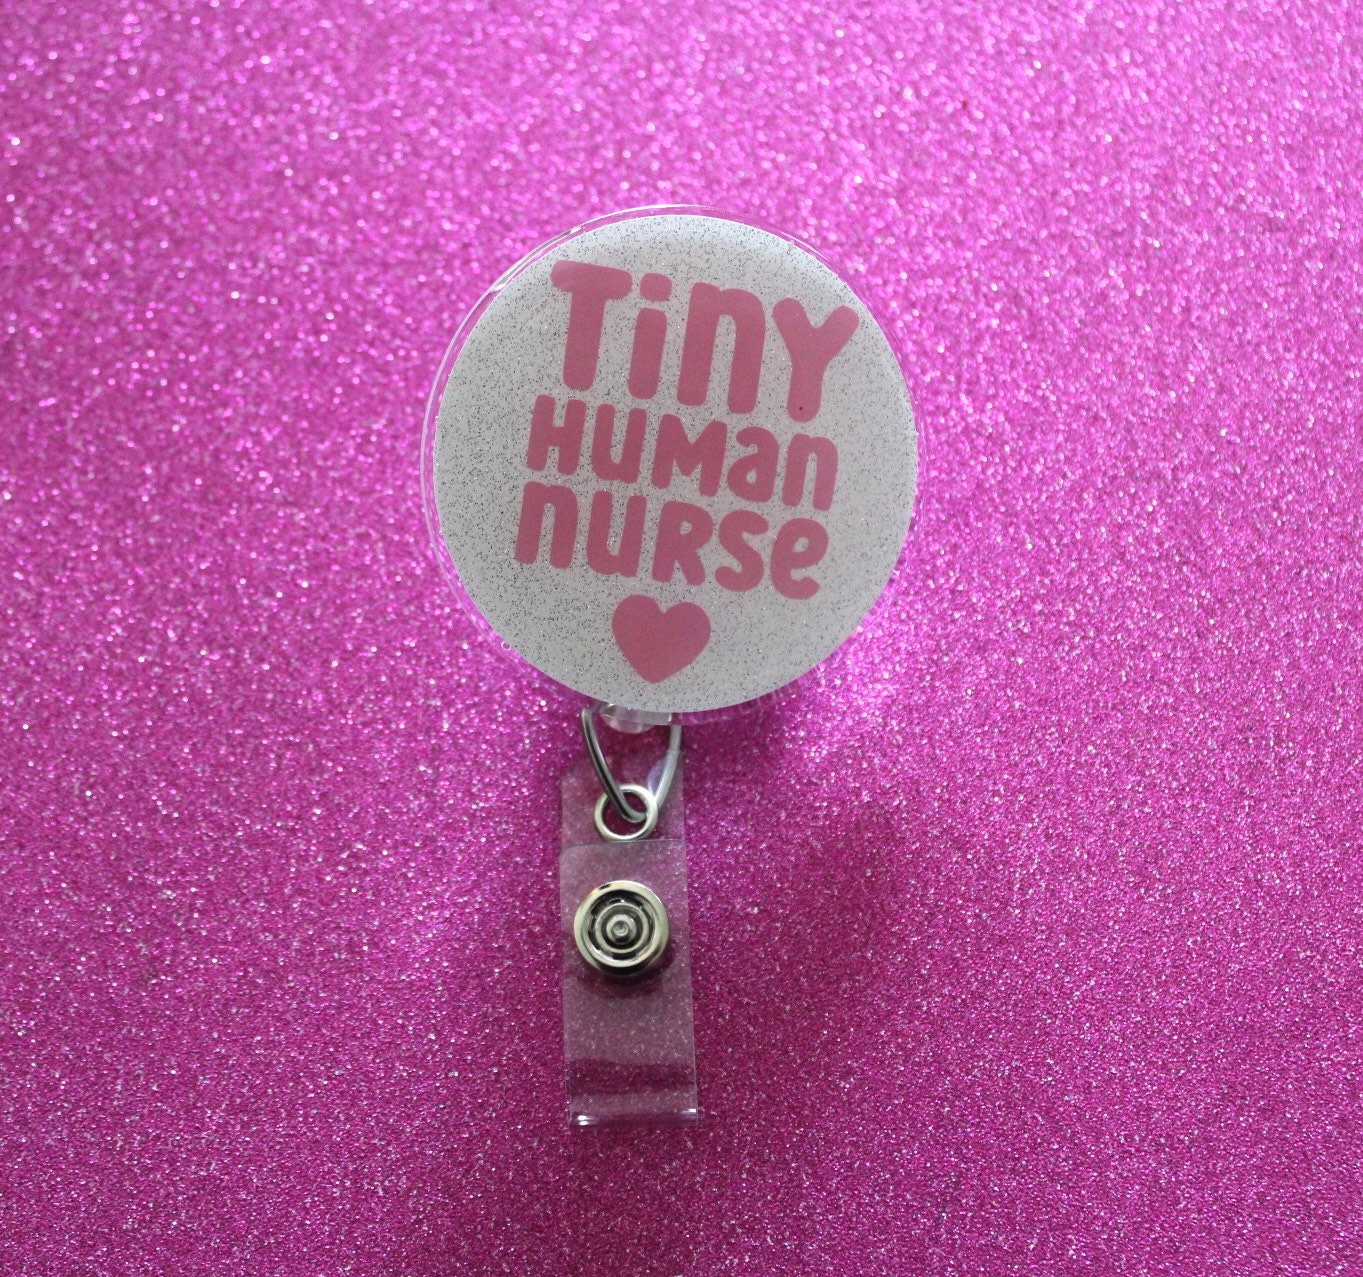 I Love Tiny Humans Badge Reel, Labor & Delivery Nurse Gift, NICU